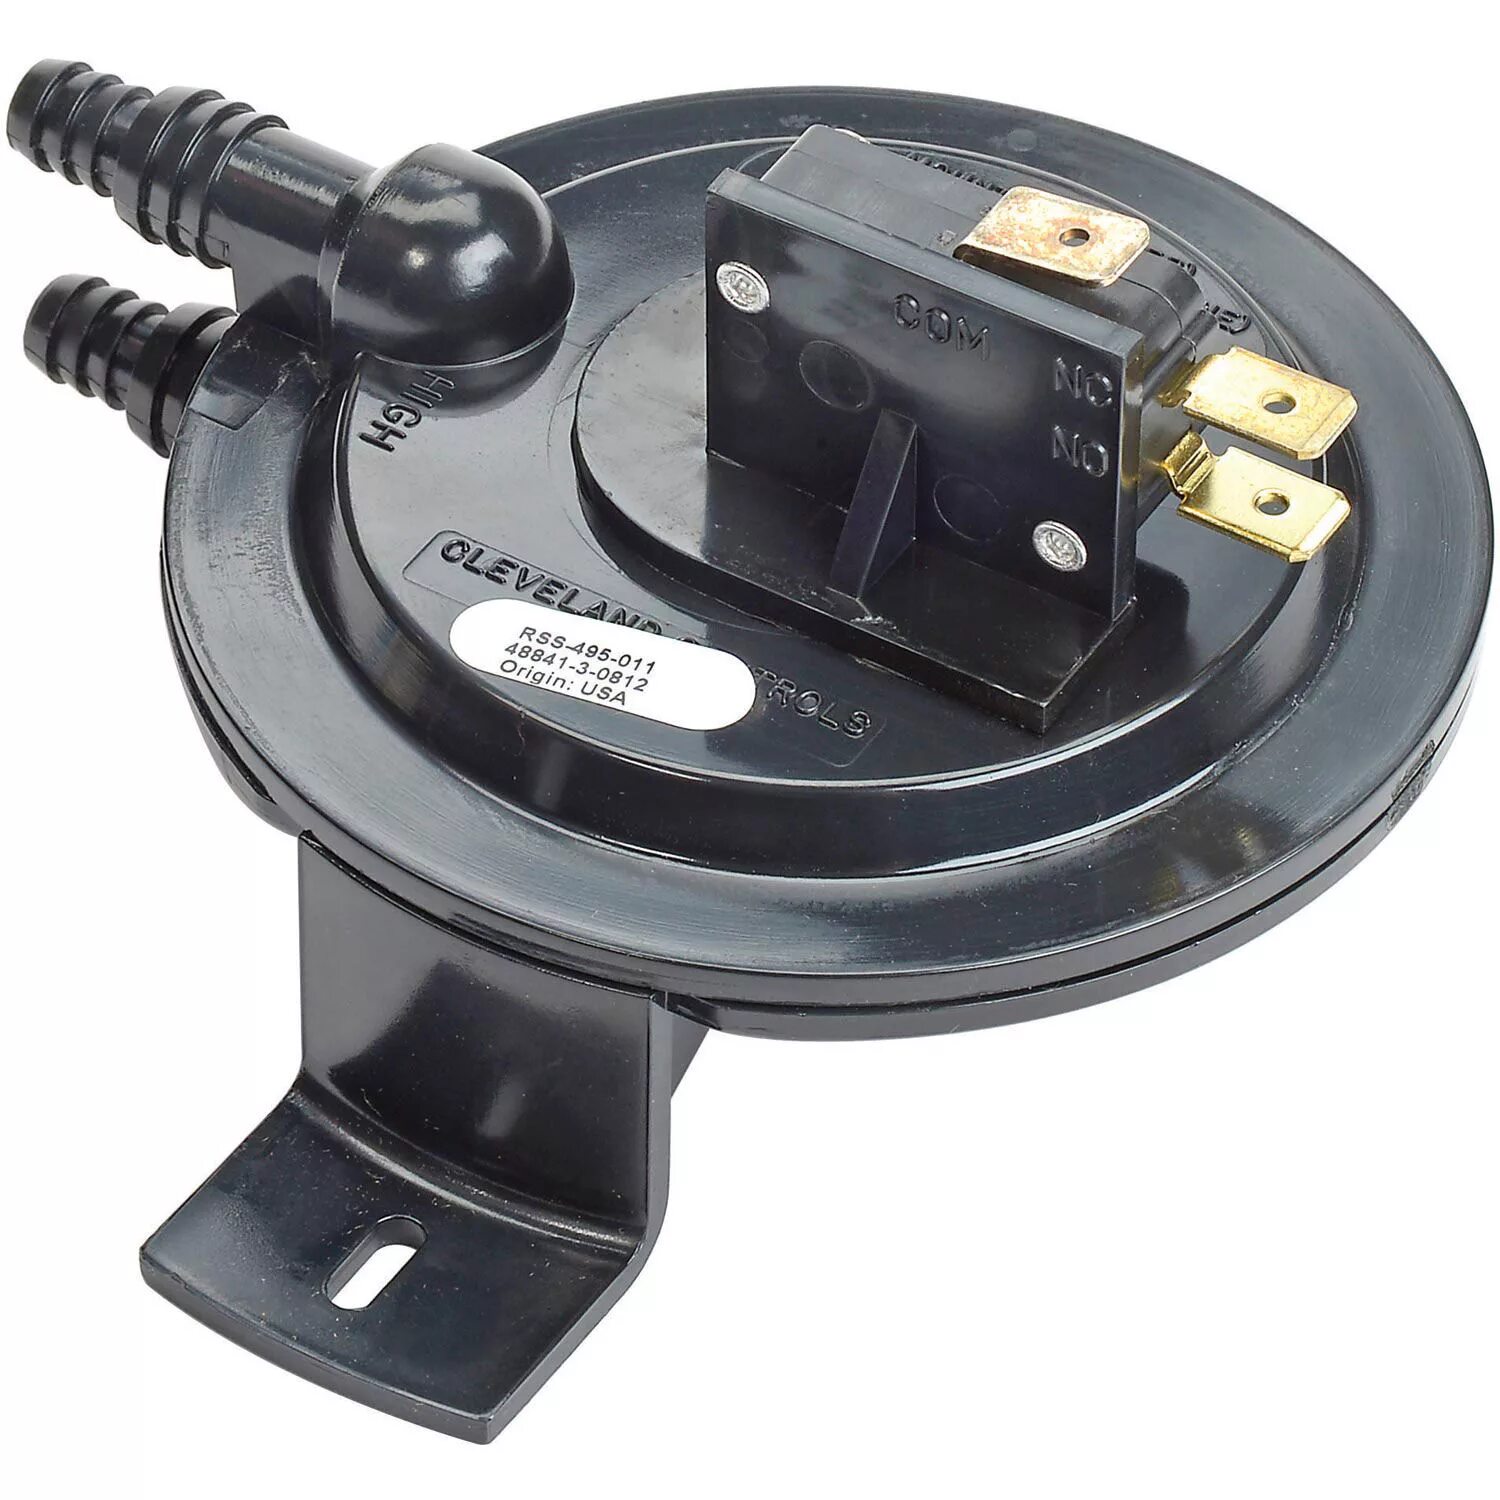 Pressure sensor 3187 b. PPS-005 sensor Pressure. Air Switch sensor. Quartz Pressure sensor 3187b.